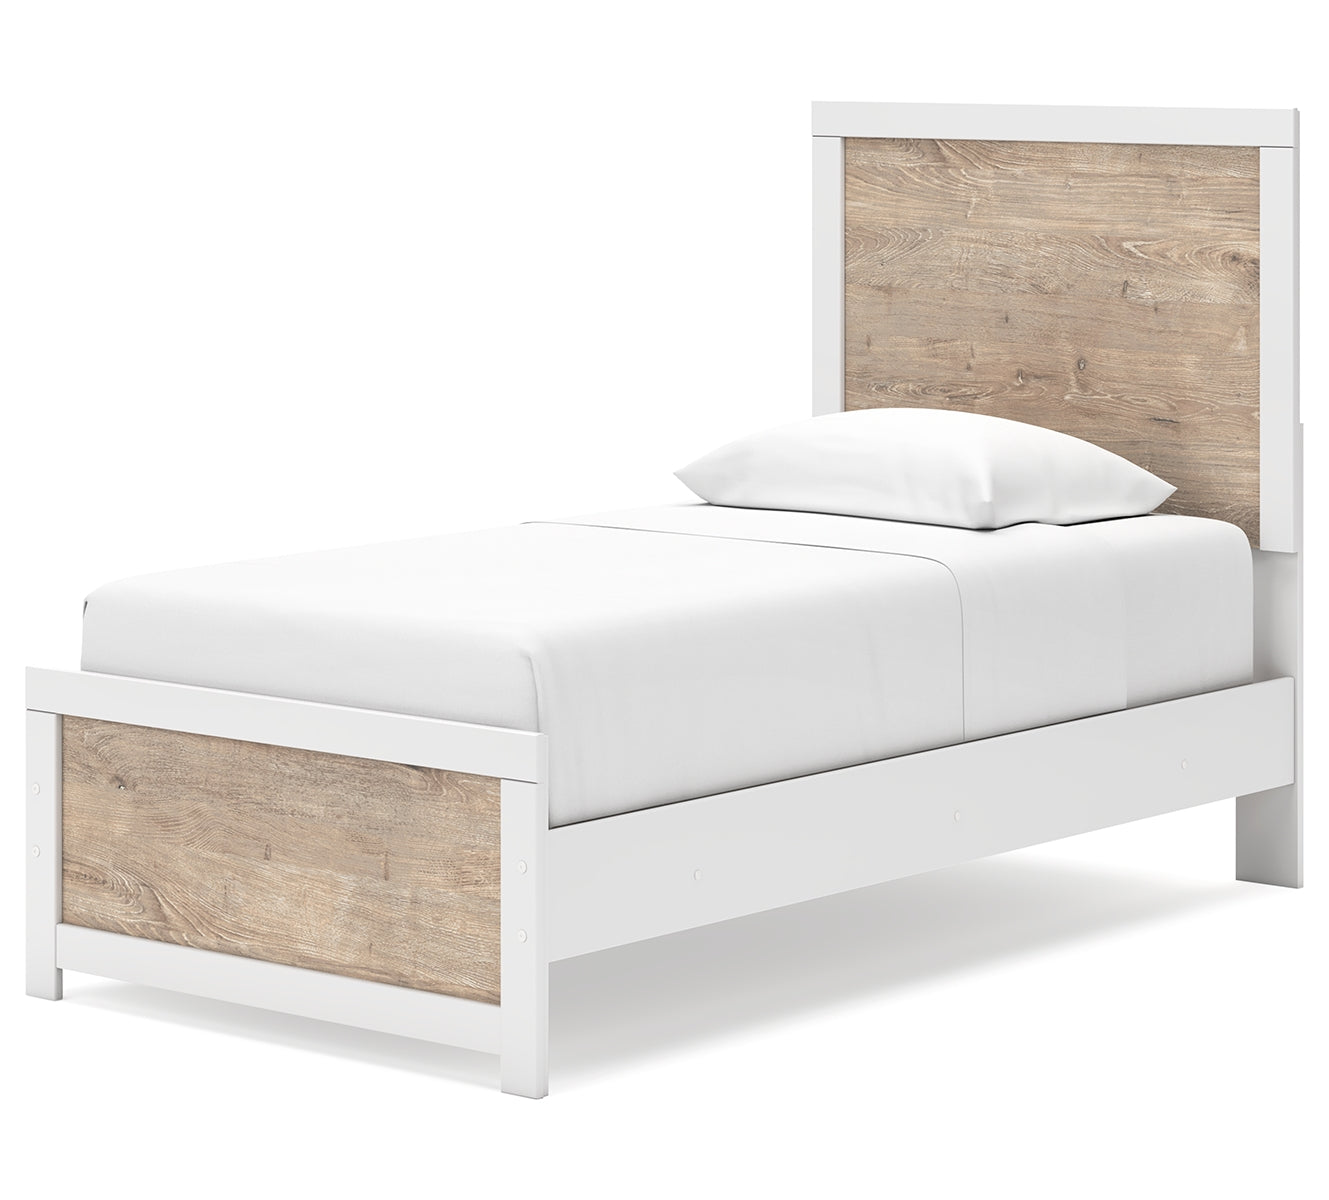 Charbitt Twin Panel Bed with Dresser